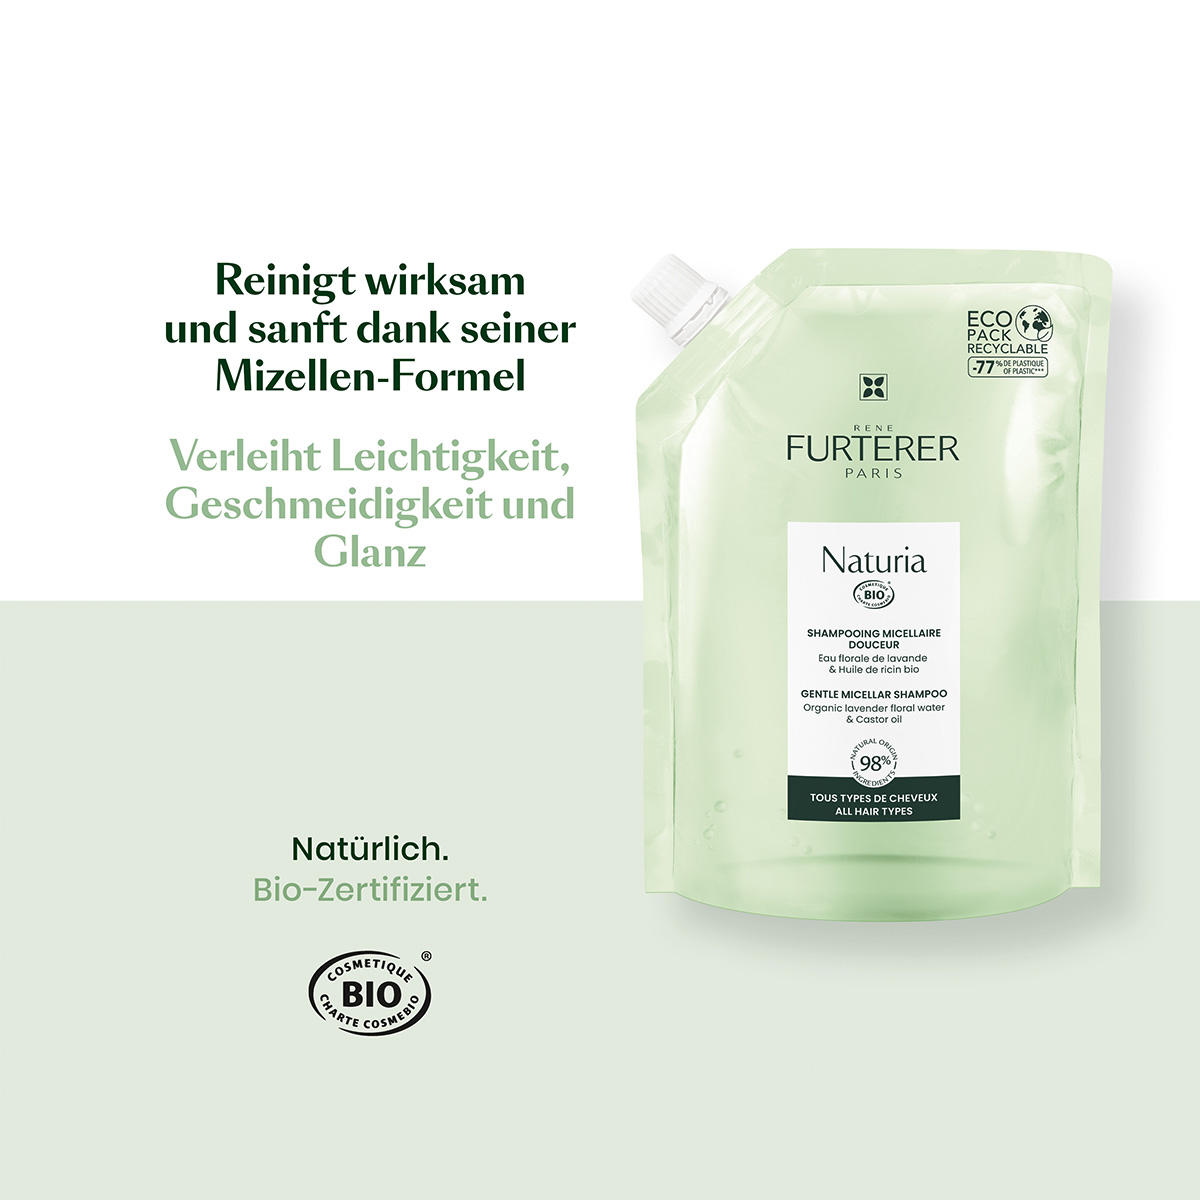 René Furterer Naturia Navulling Micellaire Shampoo 400 ml - 7